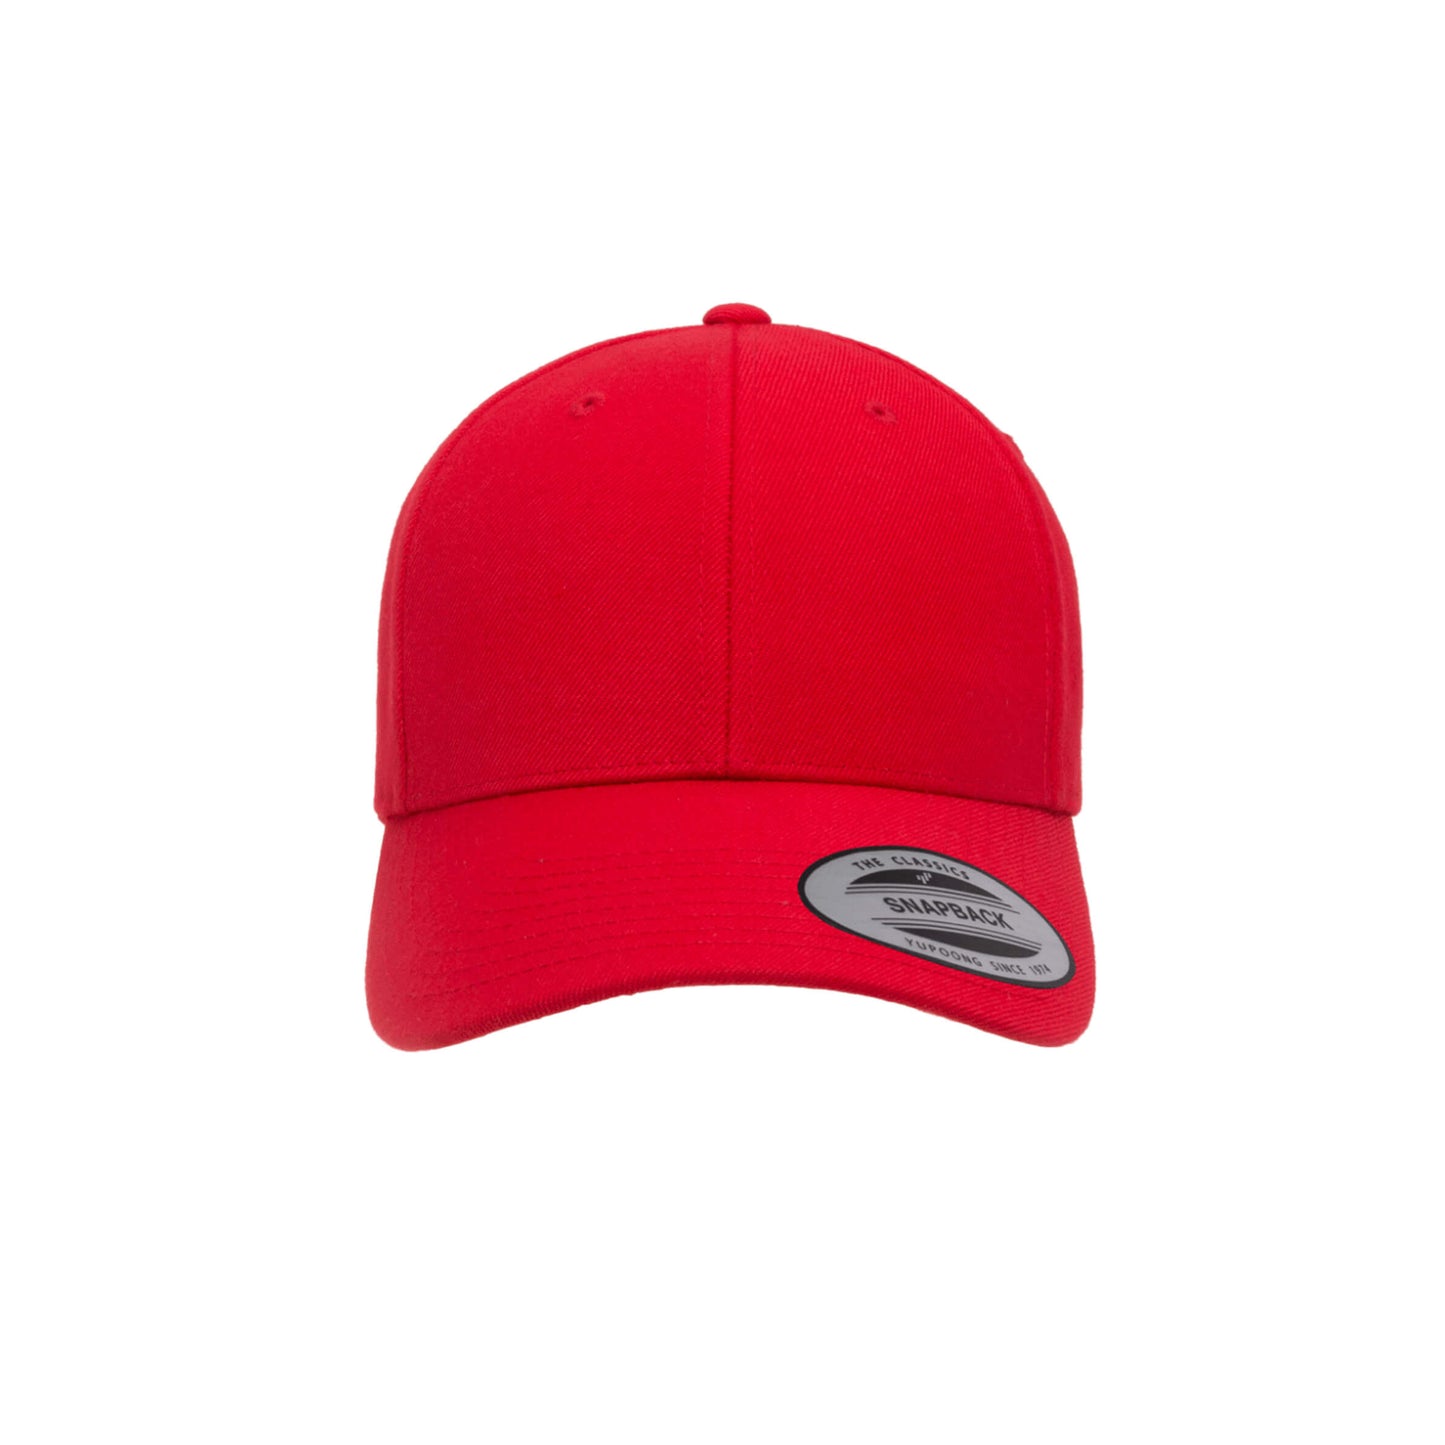 6789C-RED Curve Peak Snapback Red Cap Adjustable Fit